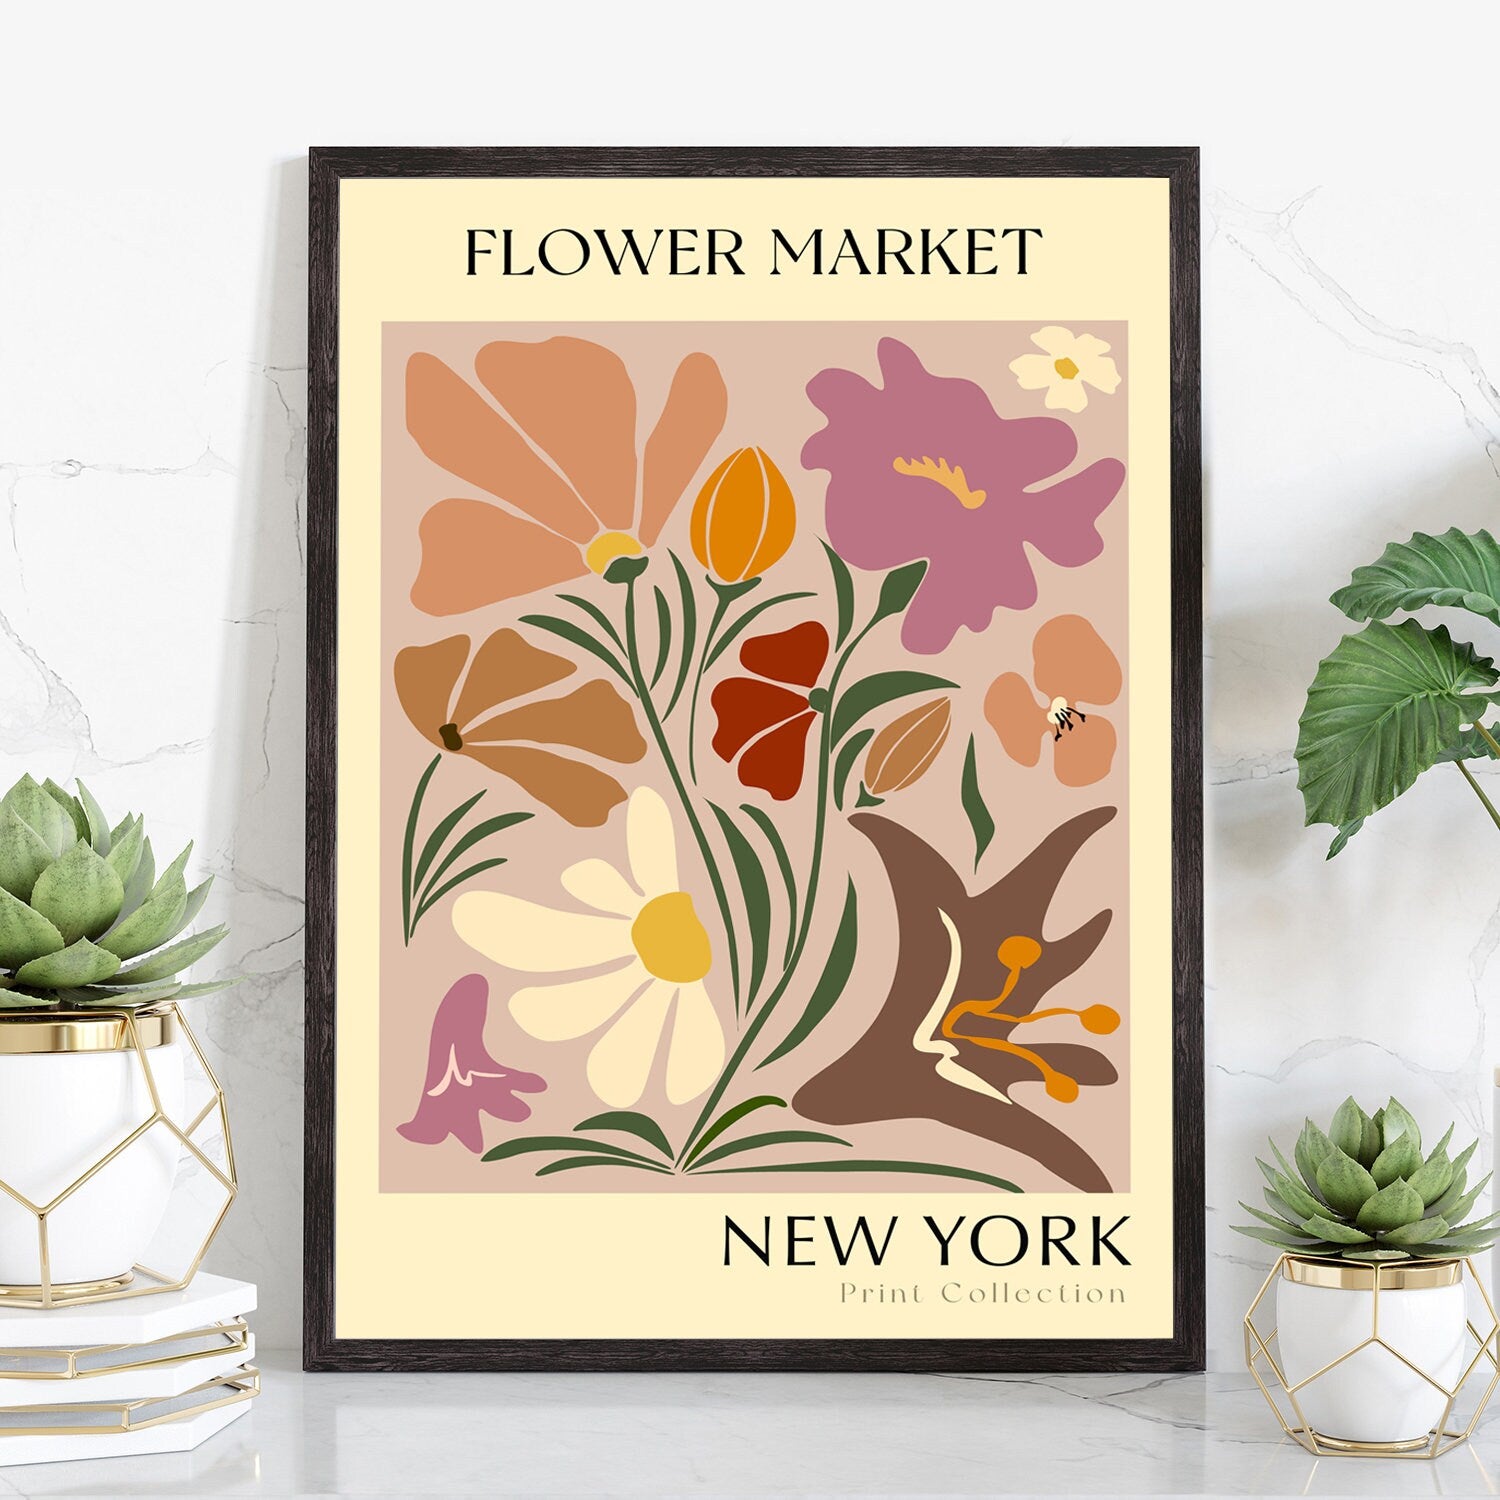 New York State flower print, USA states poster, New York flower market poster, Botanical poster, Nature poster artwork, Boho floral wall art